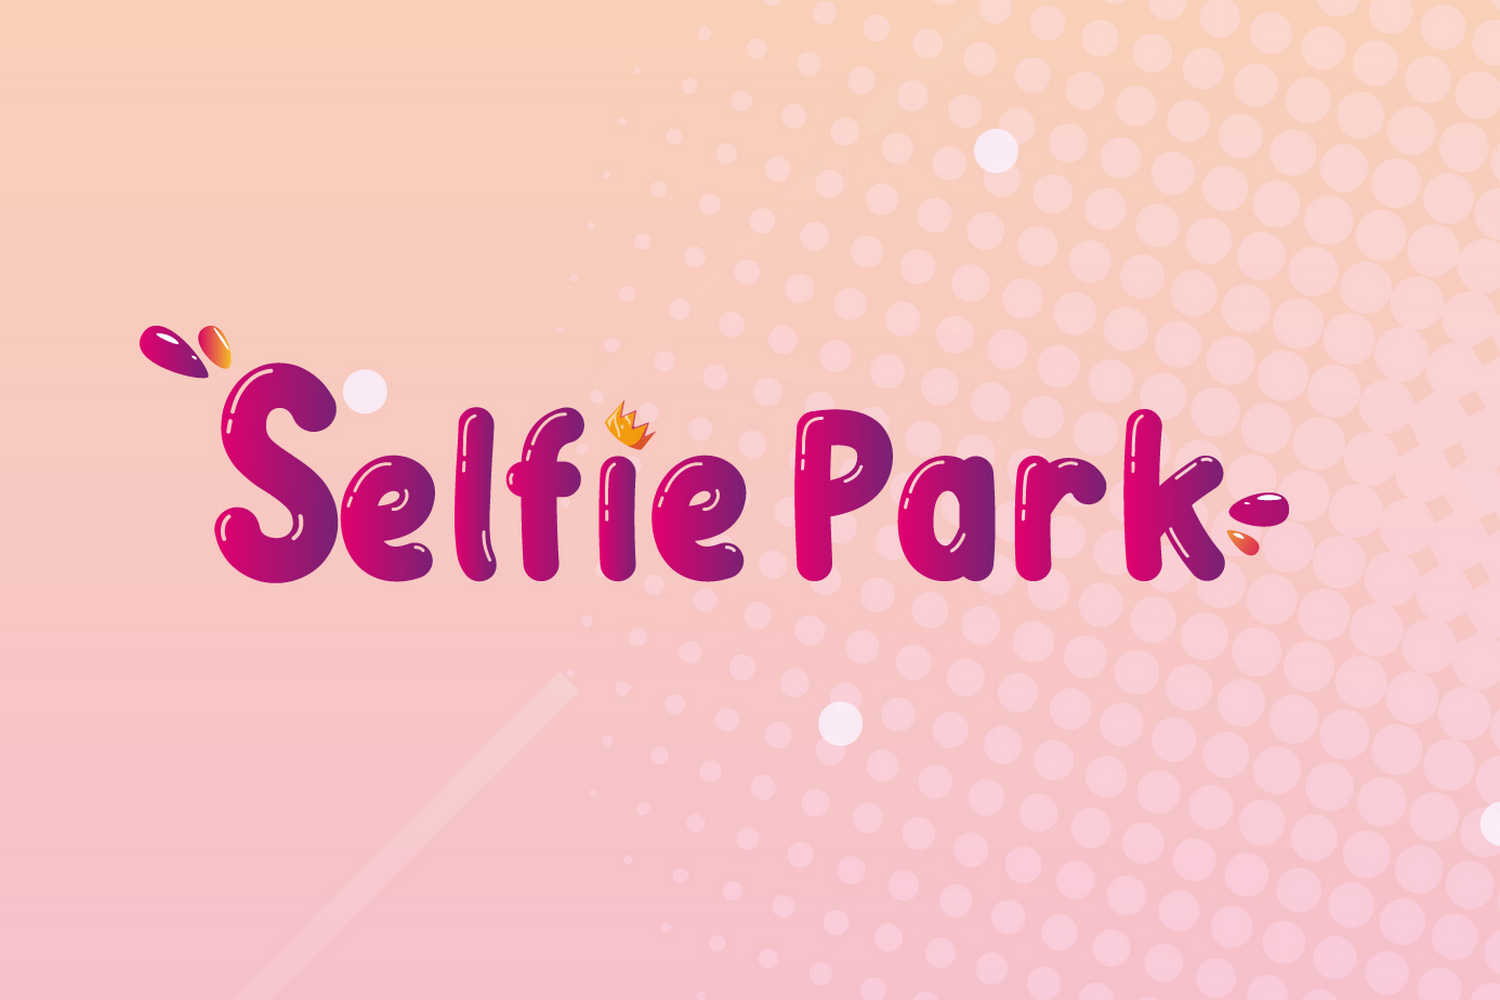 Selfie Park